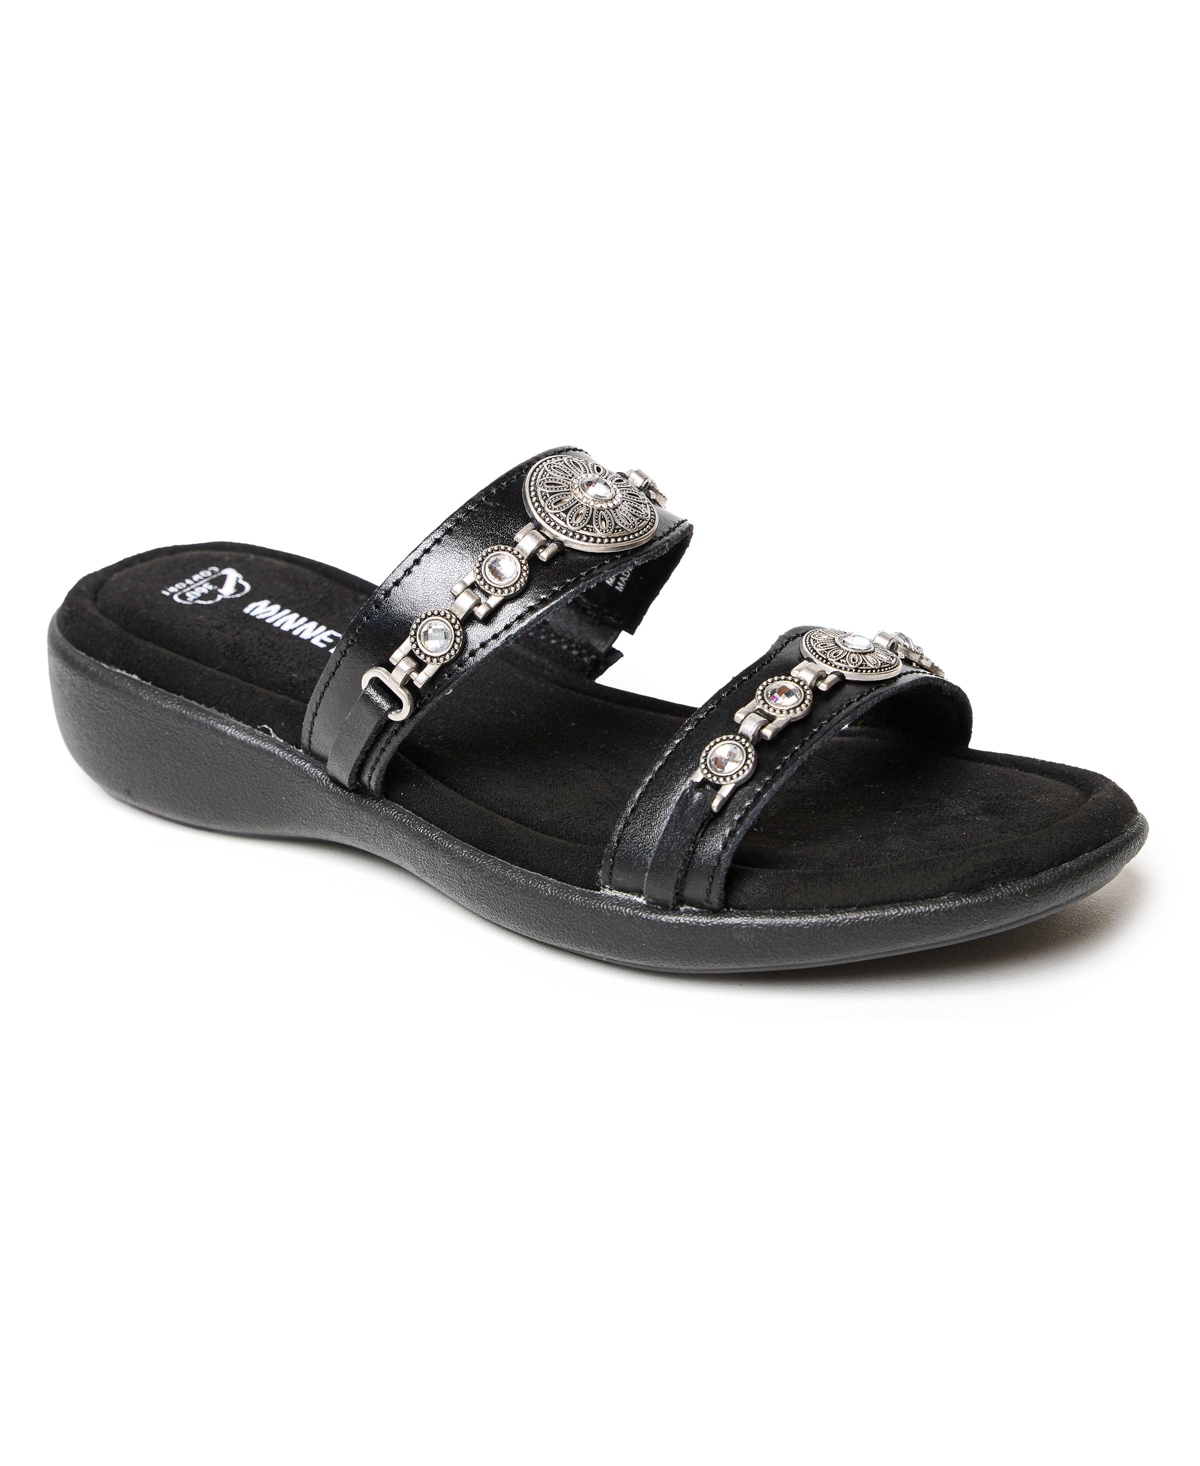 Women's Brenn Embellished Slide Sandals - Black